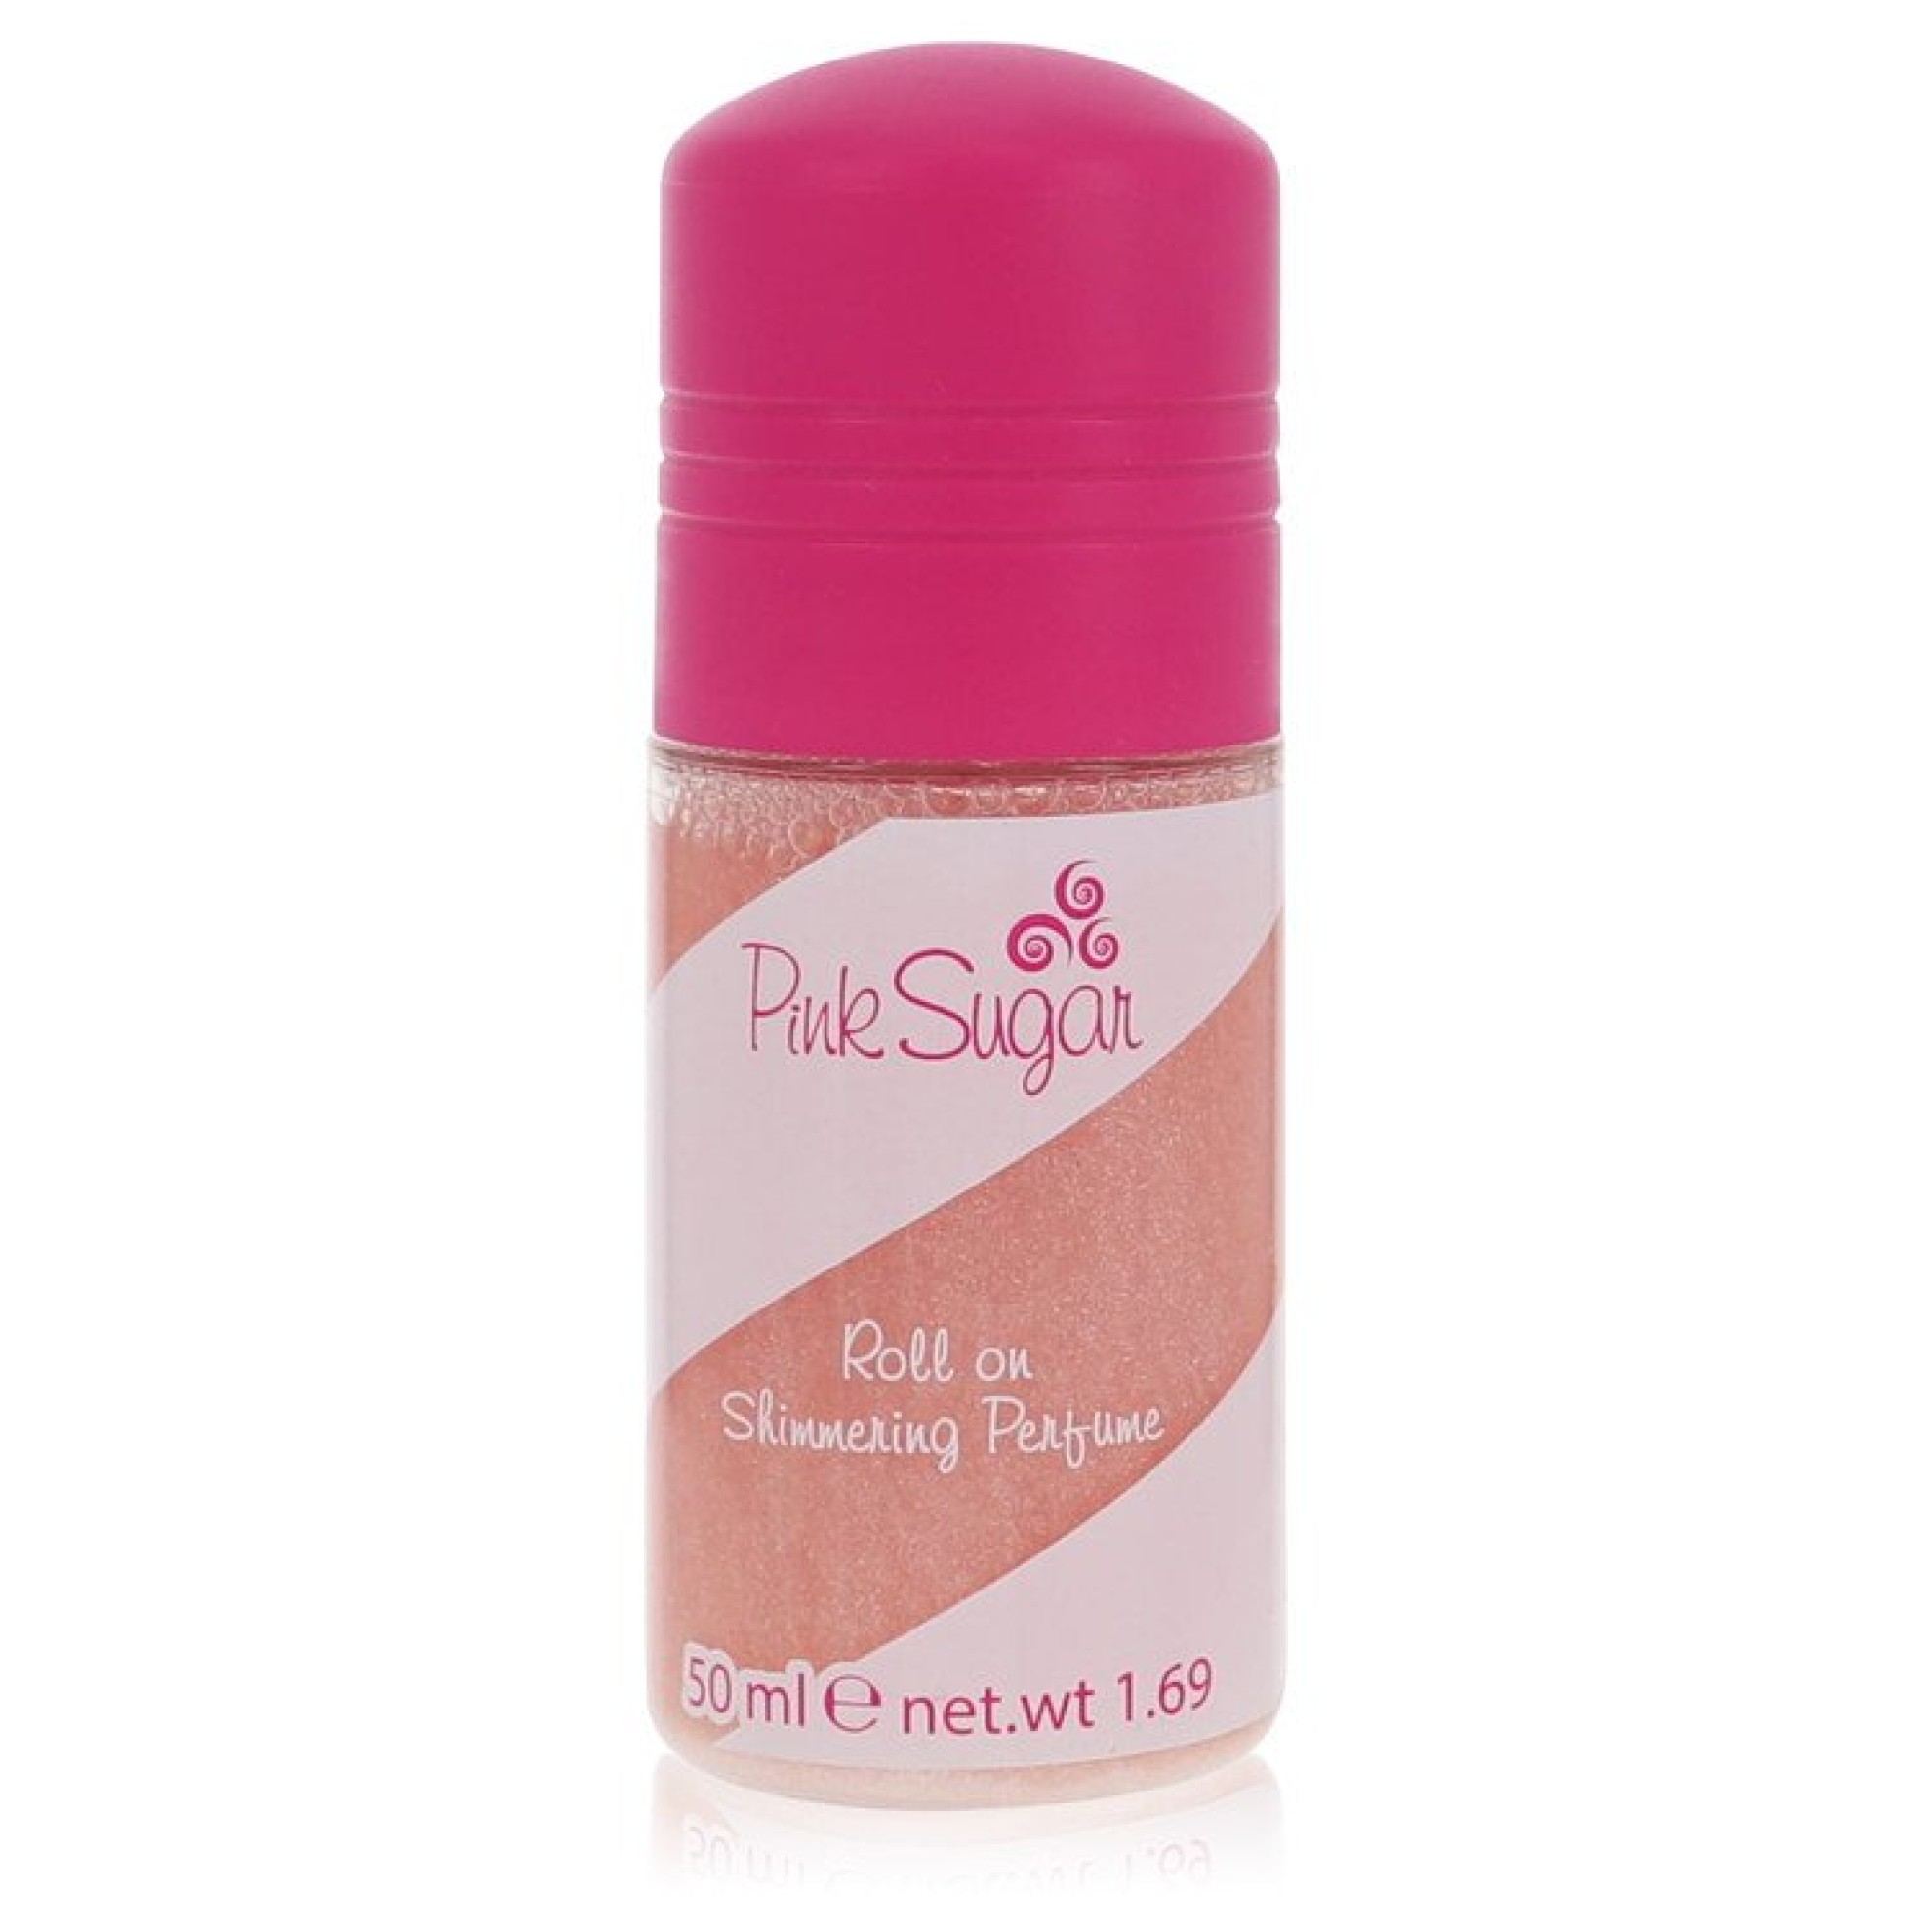 Image of Aquolina Pink Sugar Roll-on Shimmering Perfume 50 ml von XXL-Parfum.ch